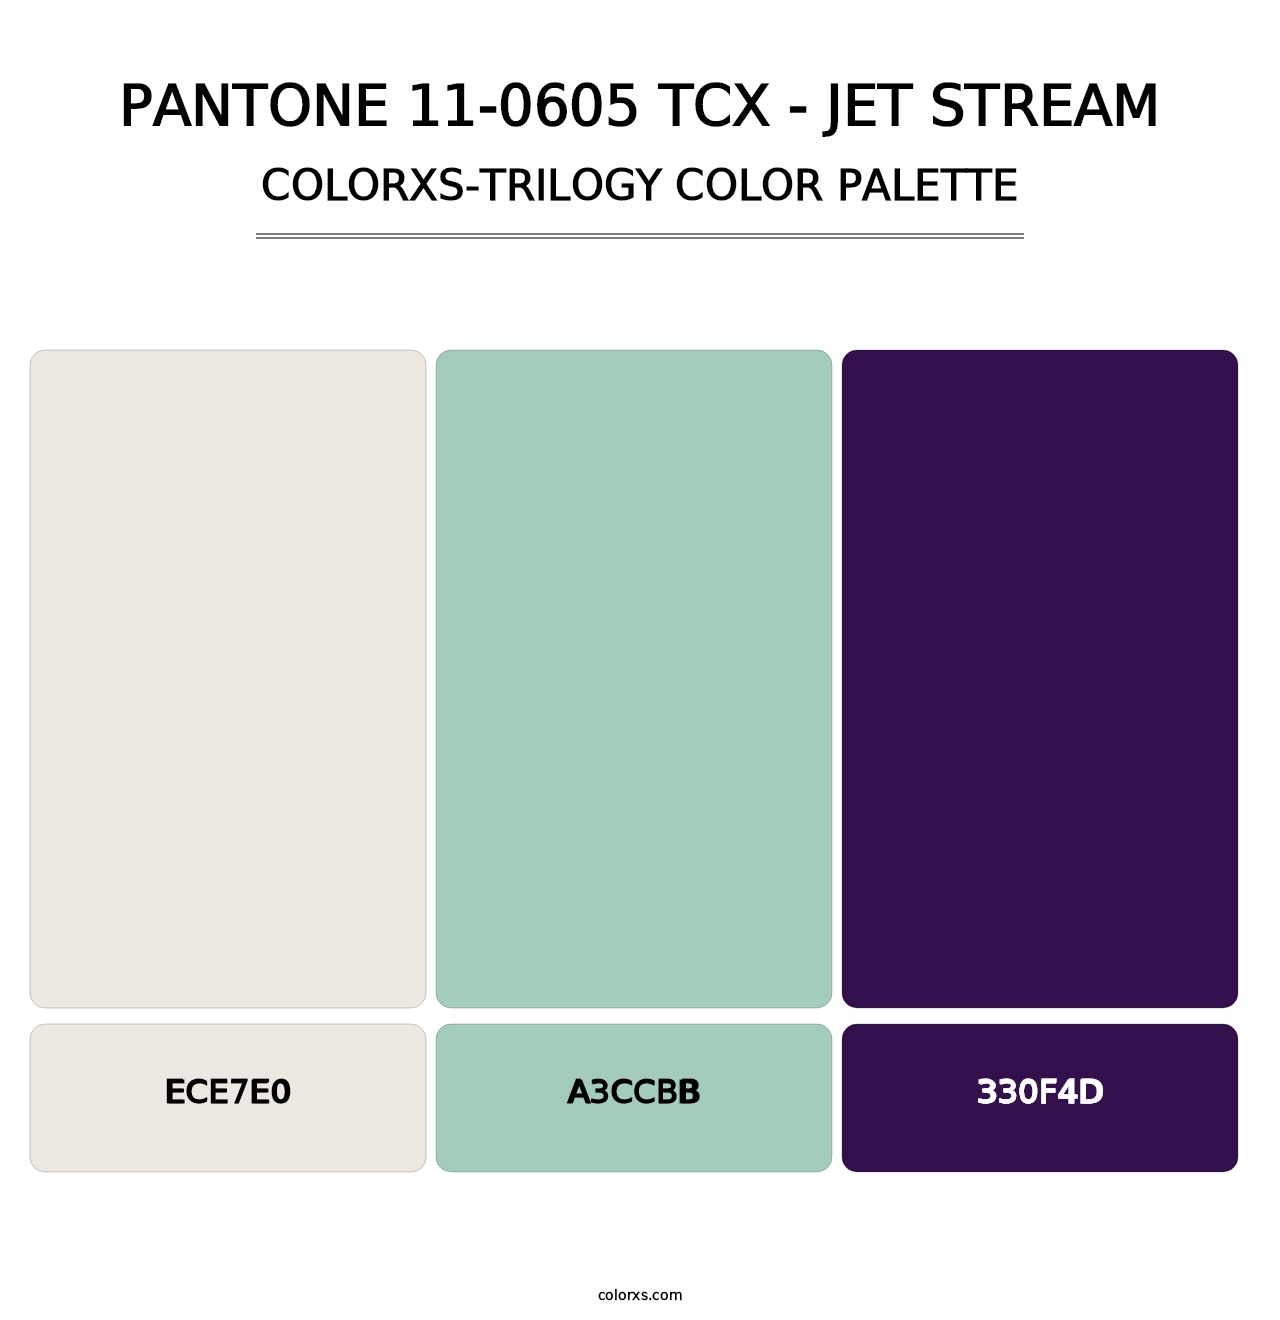 PANTONE 11-0605 TCX - Jet Stream - Colorxs Trilogy Palette